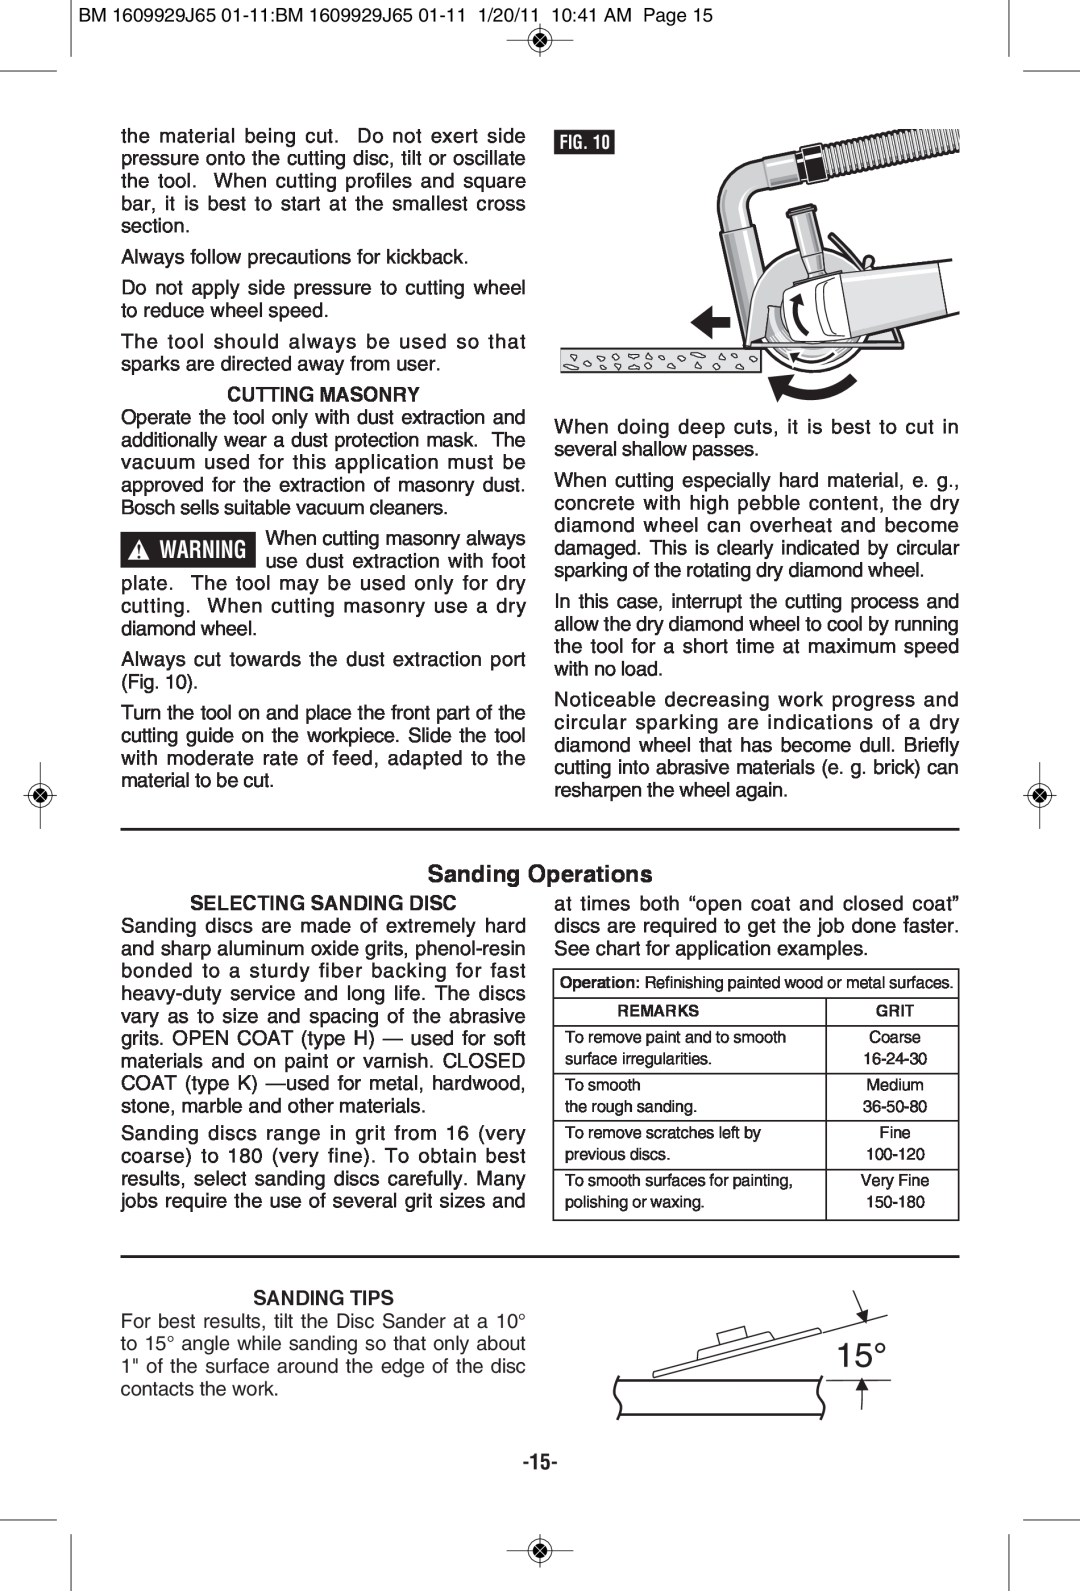 Bosch Power Tools 1810PSD, 1812PSD, 1811PS manual Sanding Operations, CUTTING MASONRy, Selecting Sanding Disc, Sanding Tips 